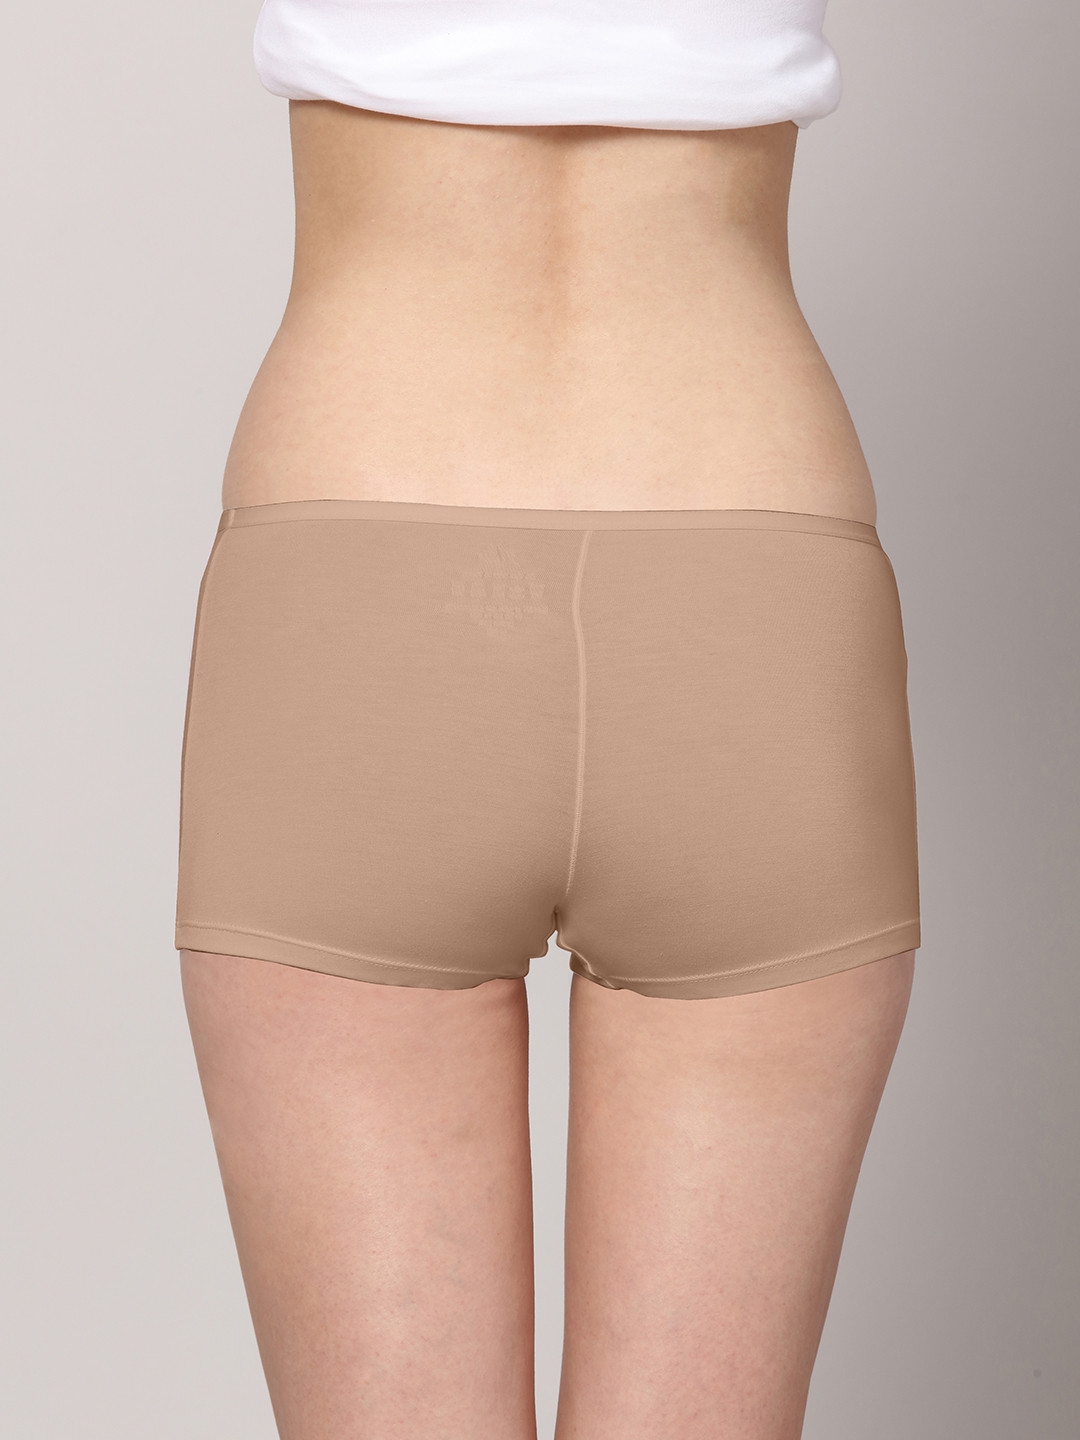 AshleyandAlvis | AshleyandAlvis Women's Panties Micro Modal, Anti Bacterial, Skinny Soft, Premium Boyshorts -No Itching, Sweat Proof, Double In-seam Gusset 4